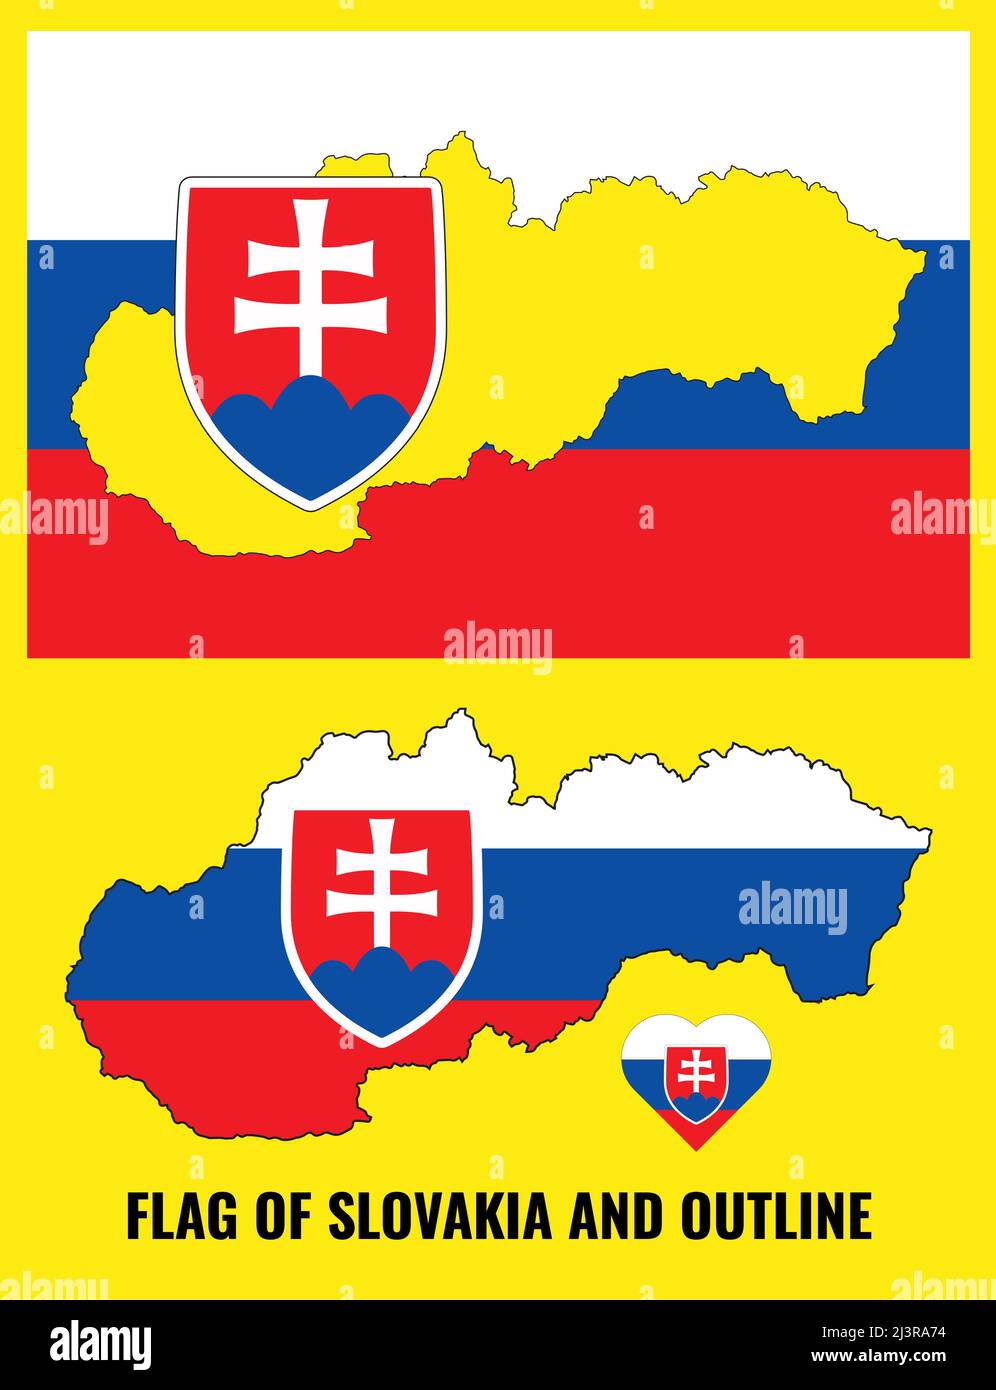 Slovakia flag and outline. Flag map of Slovakia. Illustration. Stock Vector